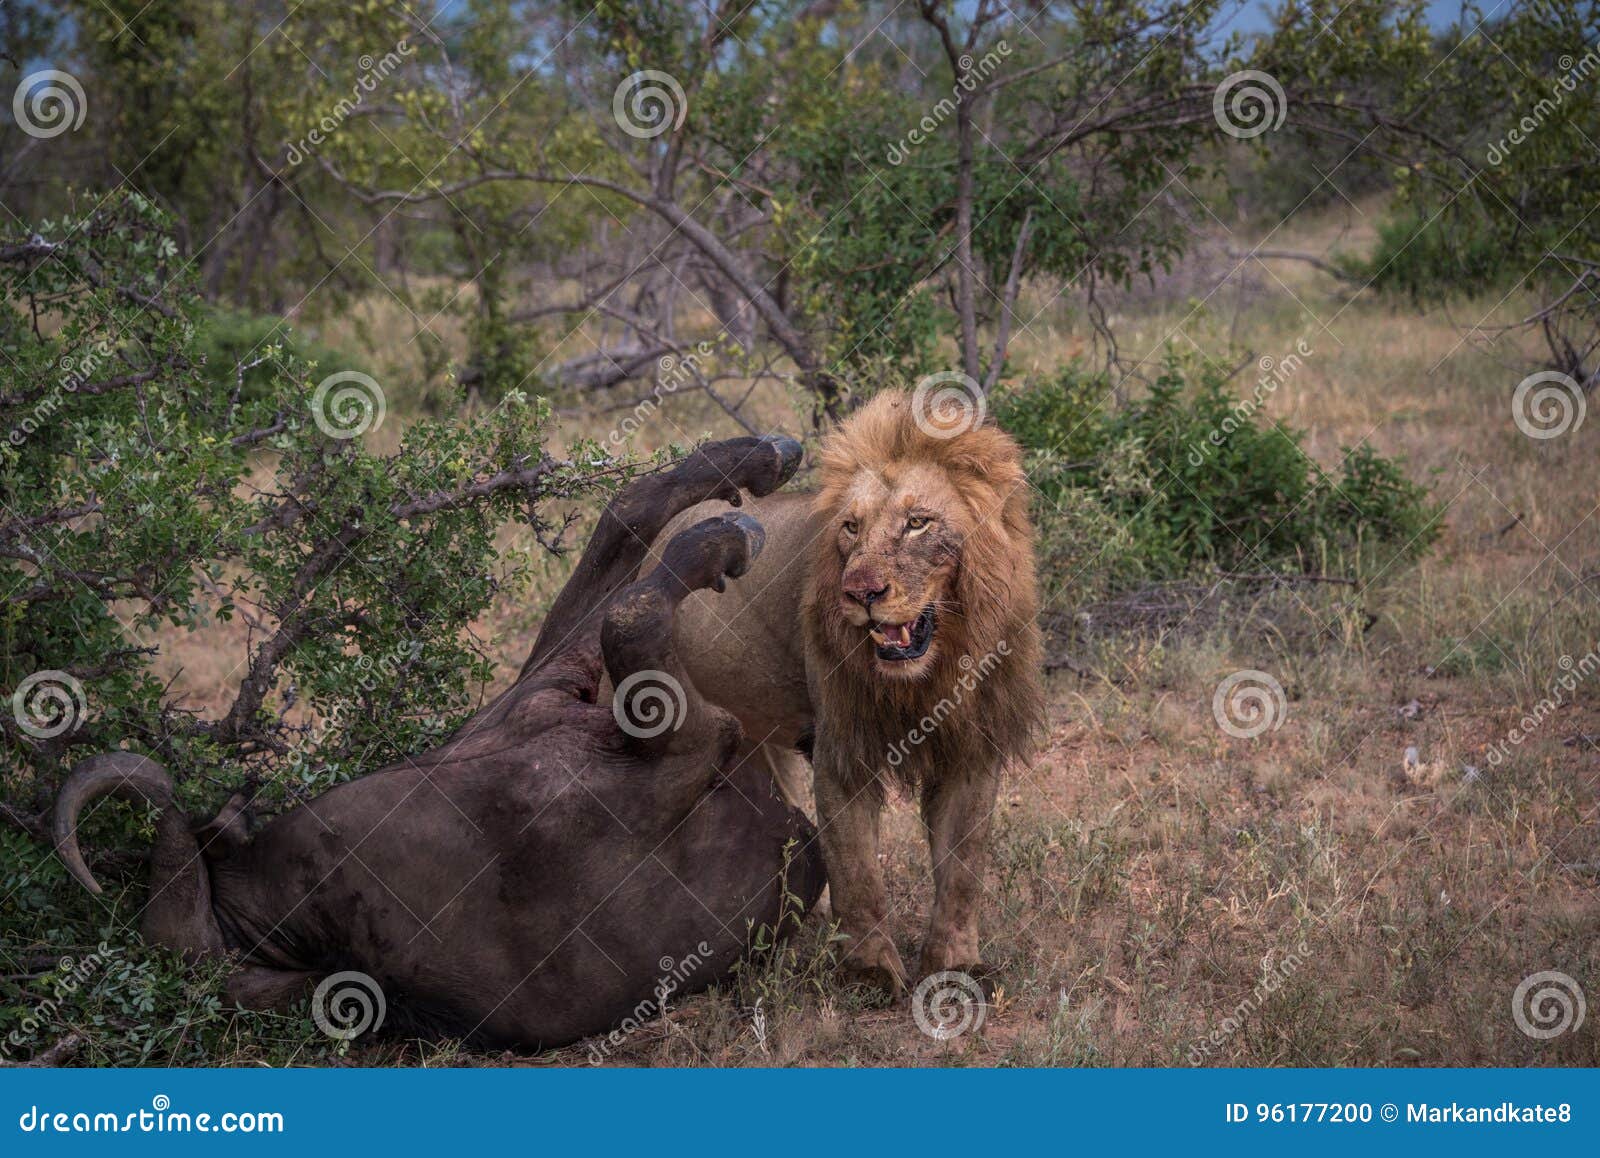 Lion Killing a Buffalo Stock Photo - Image of wild, 96177200